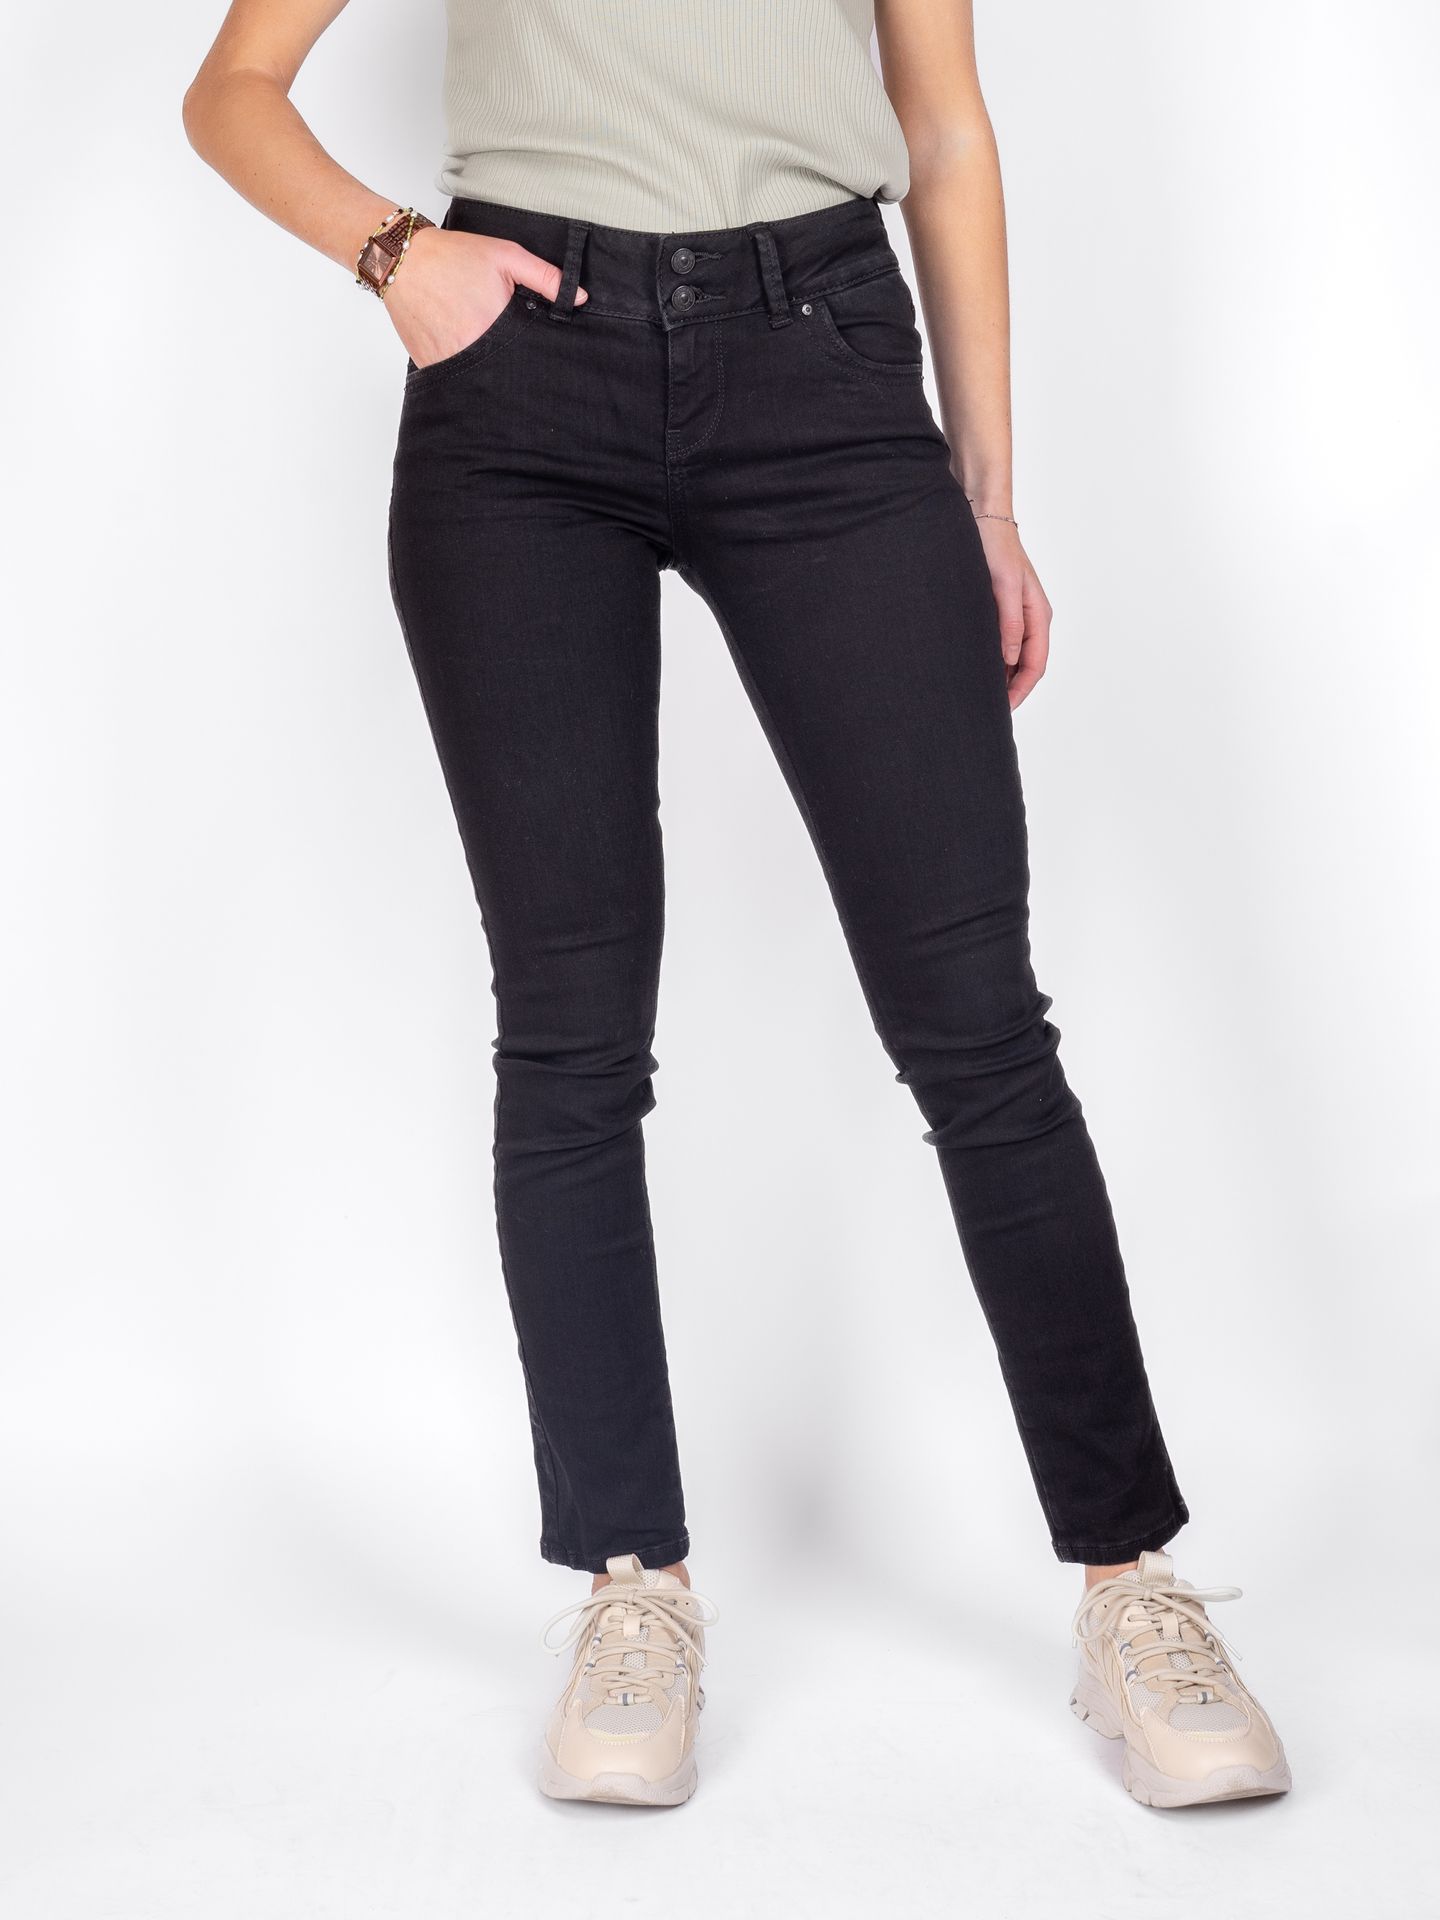 Ltb jeans Molly Hw Black to Black 4796 Zwart 00086040-Z1